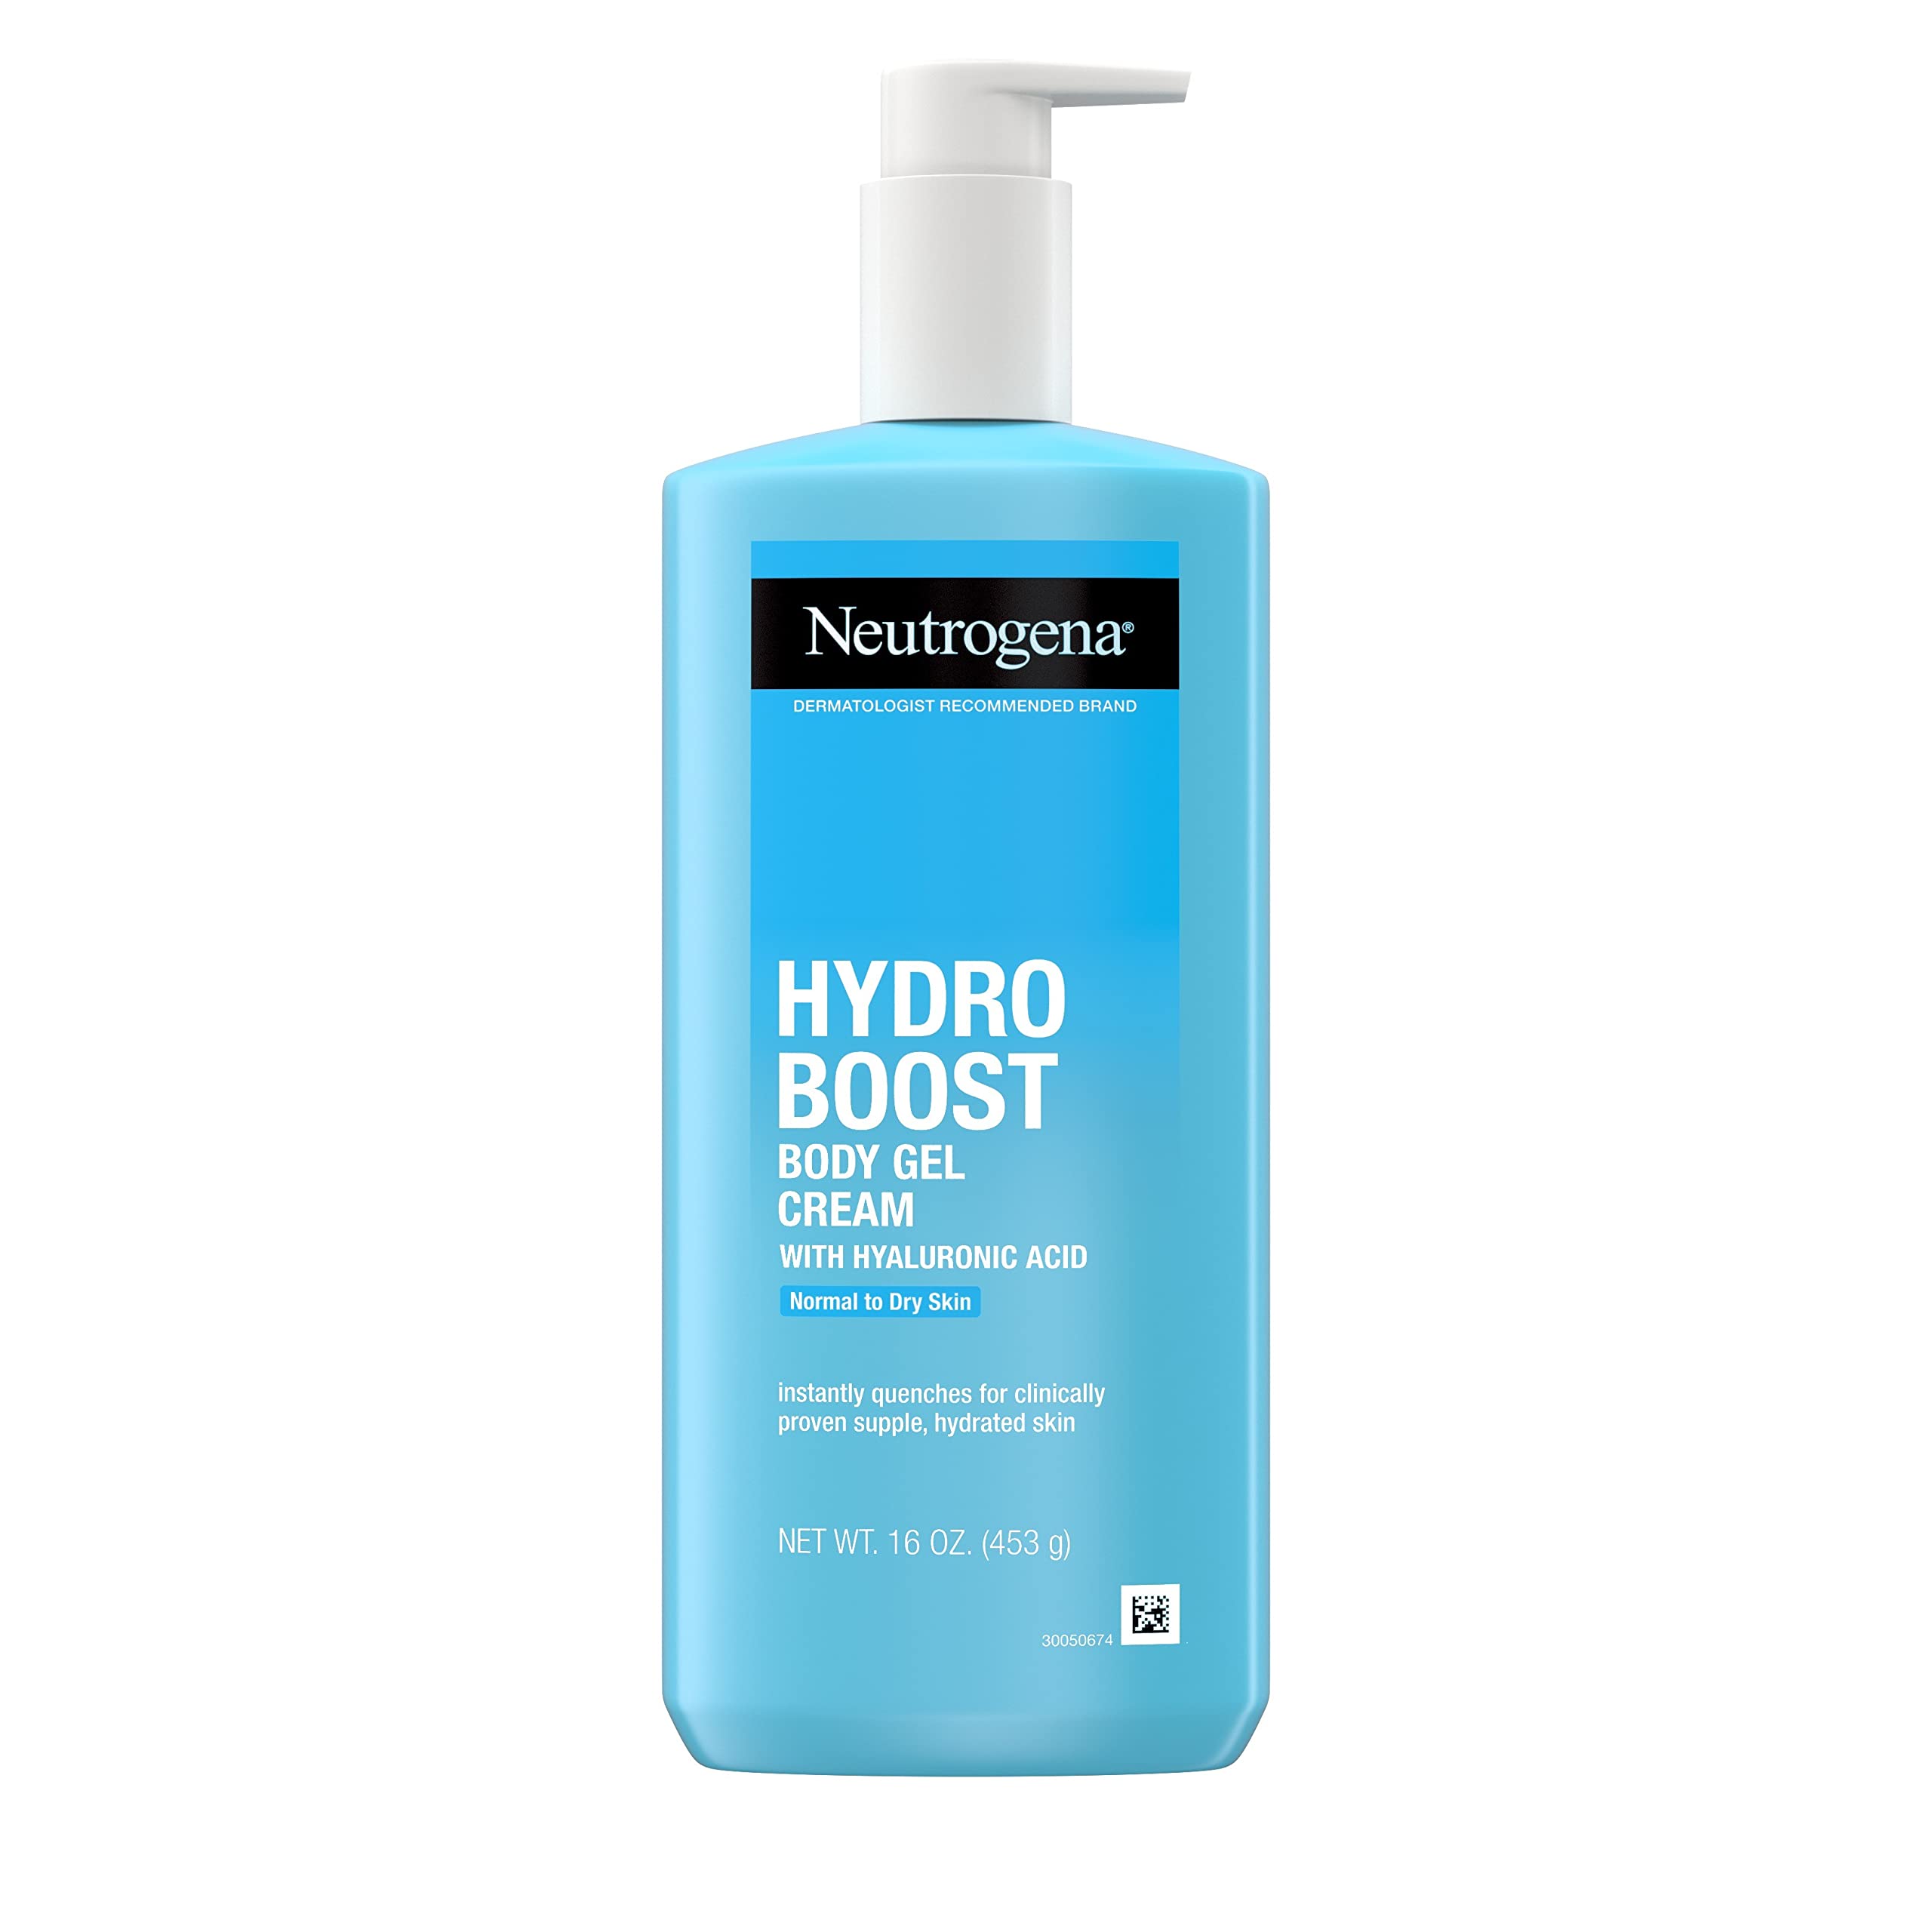 16-Oz Neutrogena Hydro Boost Body Moisturizing Gel Cream Body Lotion w/ Hyaluronic Acid $8.22 w/ S&S + Free Shipping w/ Prime or on $35+